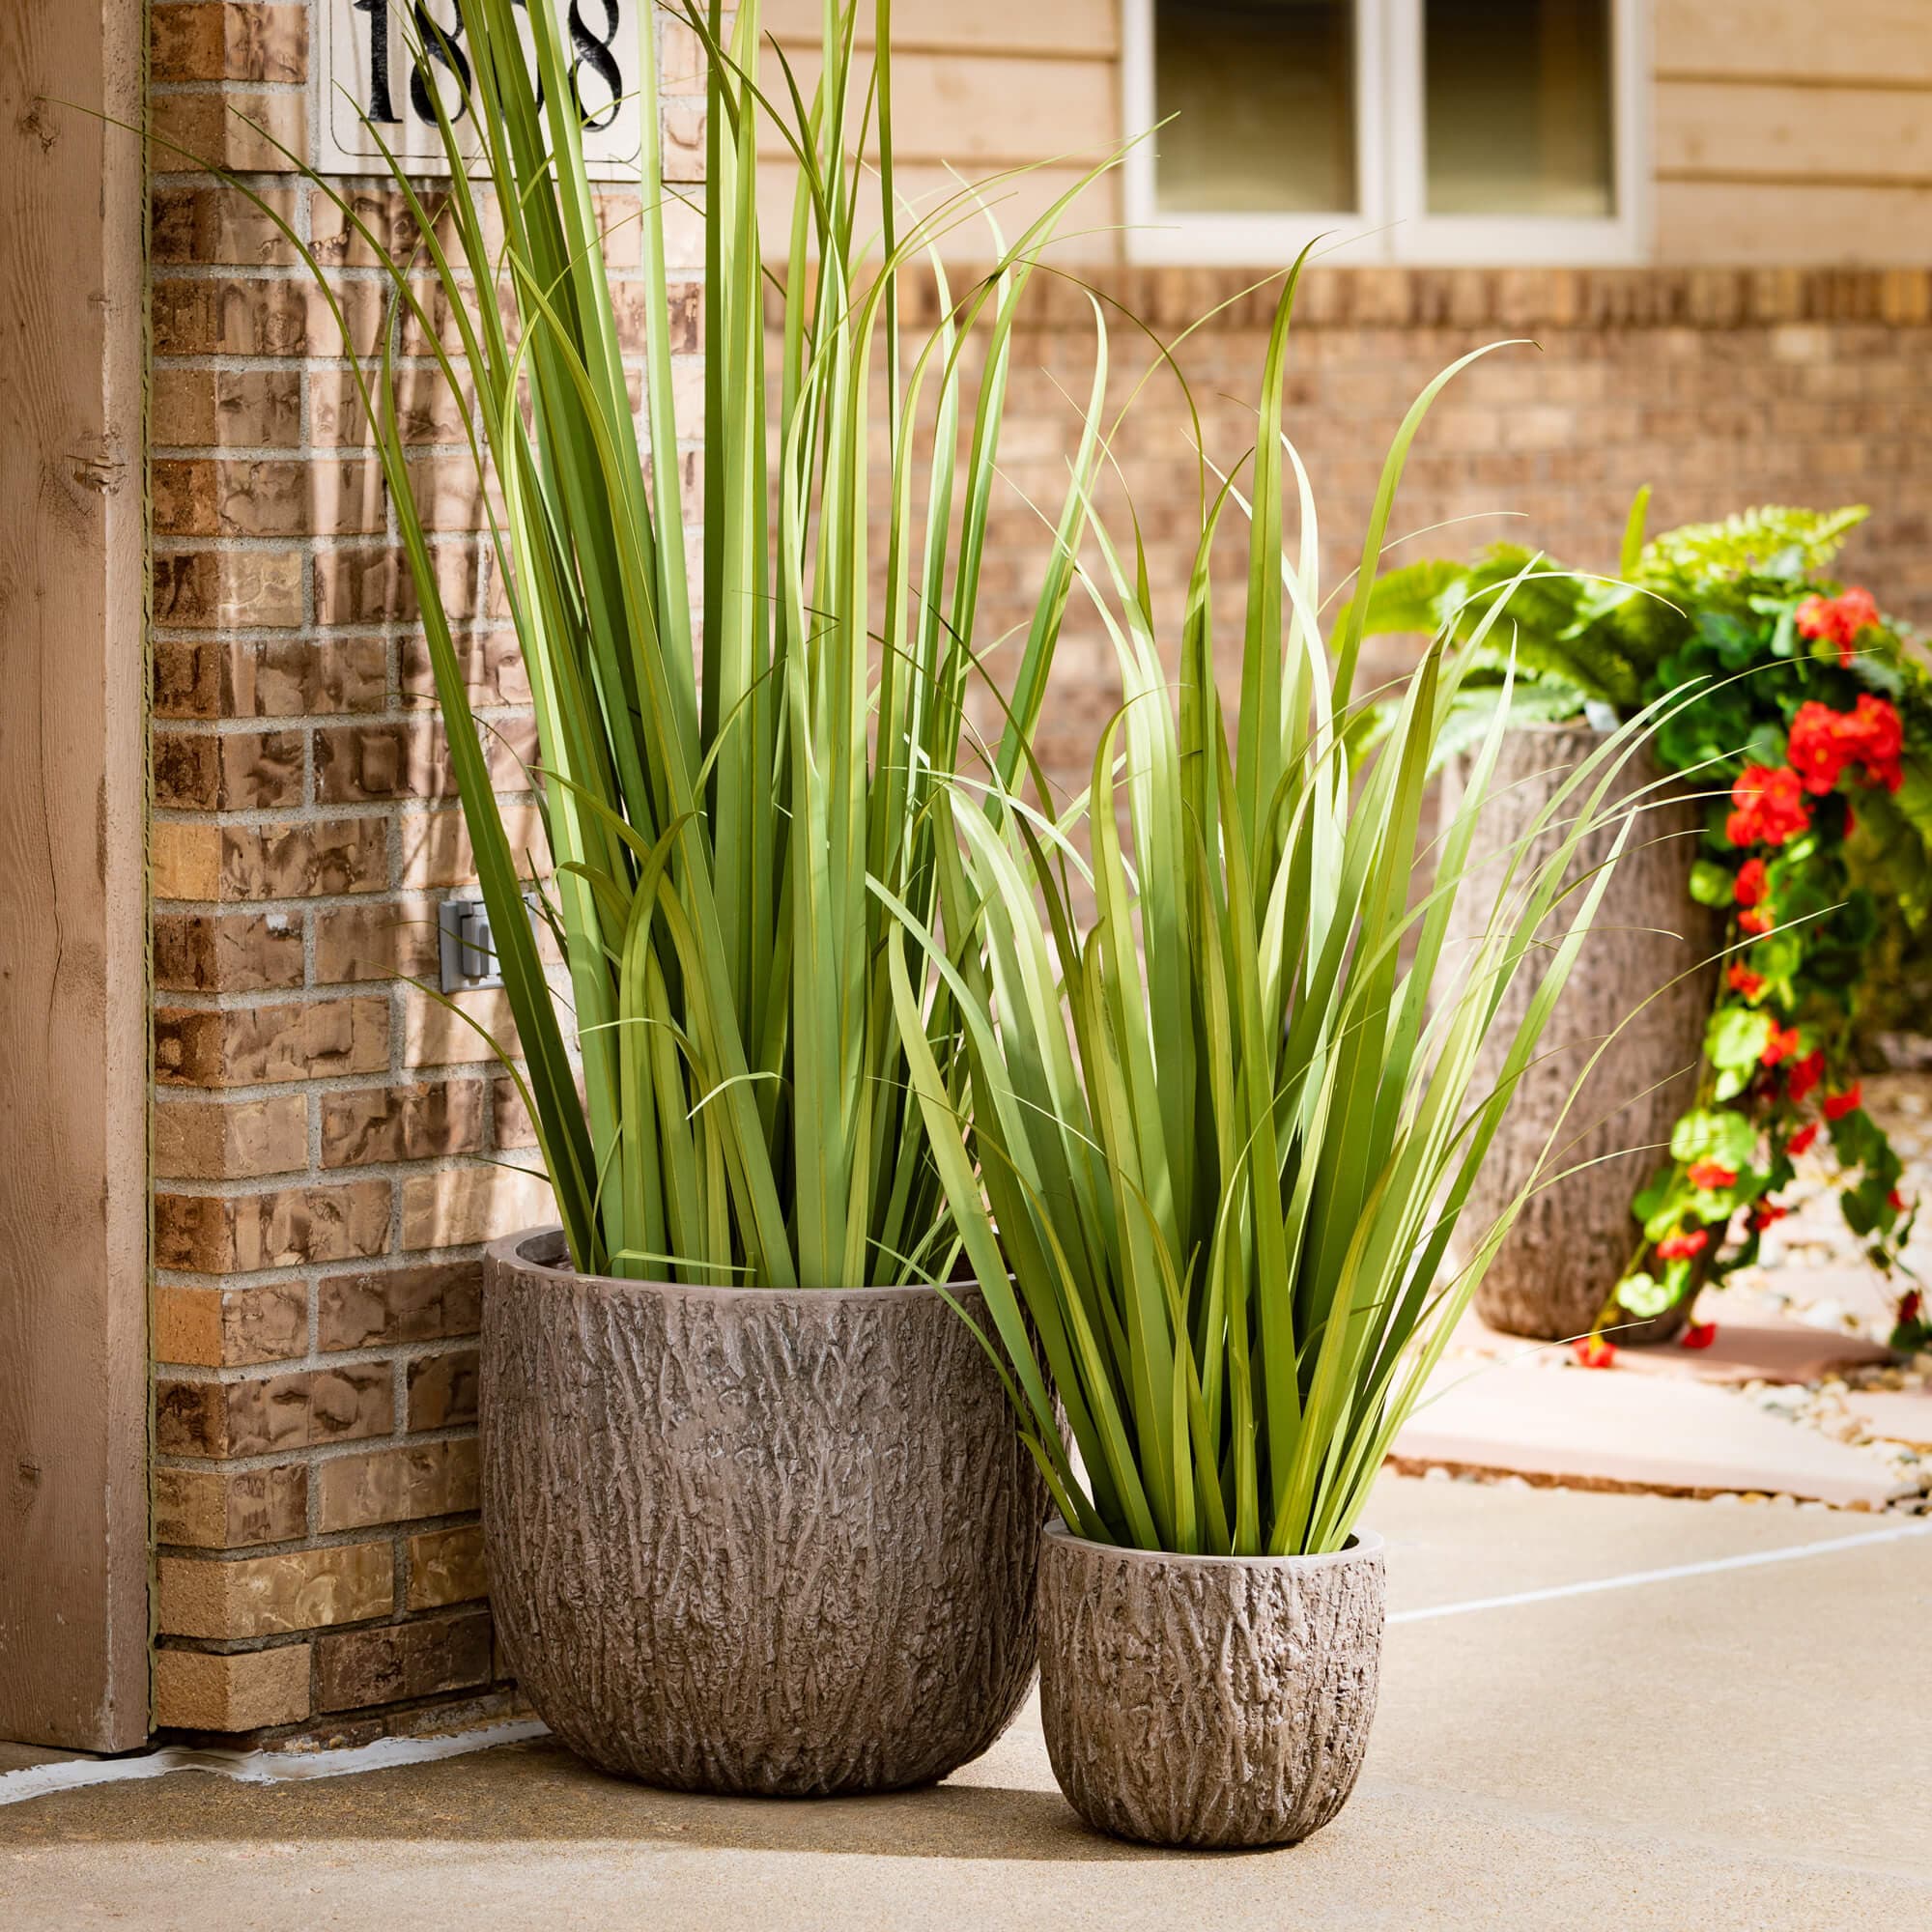 Textured Cement Planters Pot Trio Elevate Home Decor - Outdoors